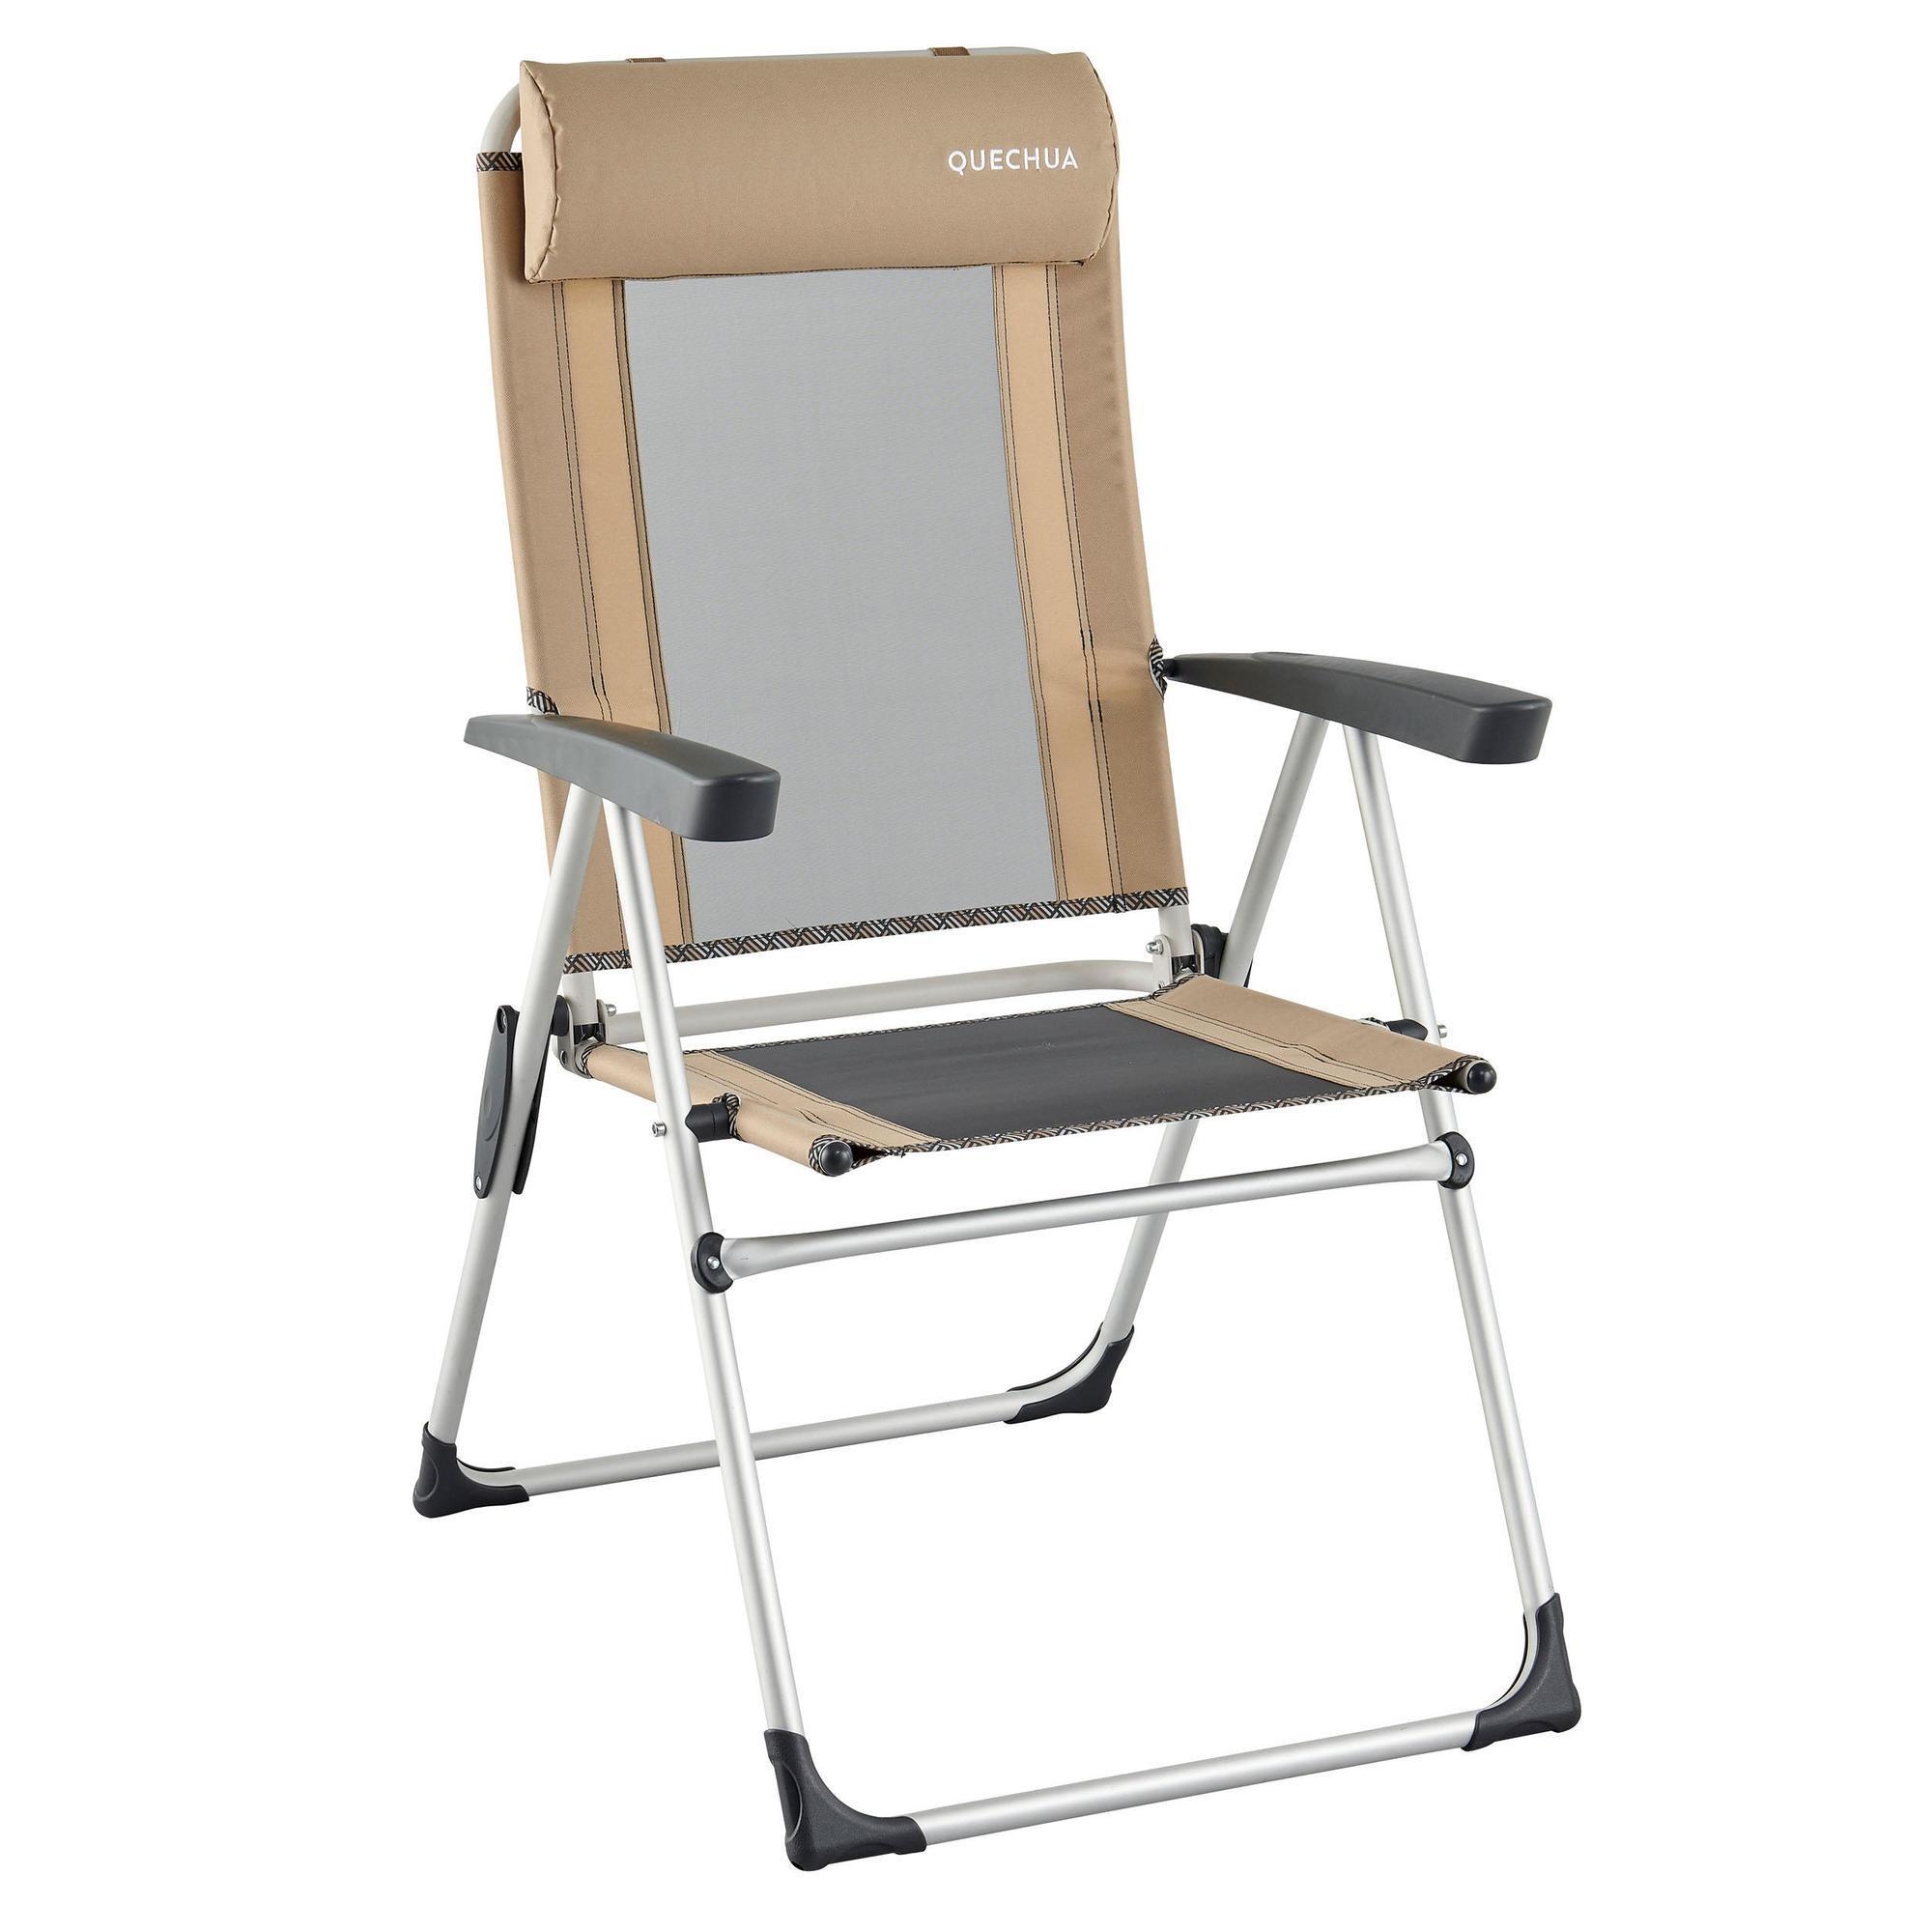 Scaun Pliabil Confortabil din oțel/aluminiu Camping decathlon.ro  Mobilier camping